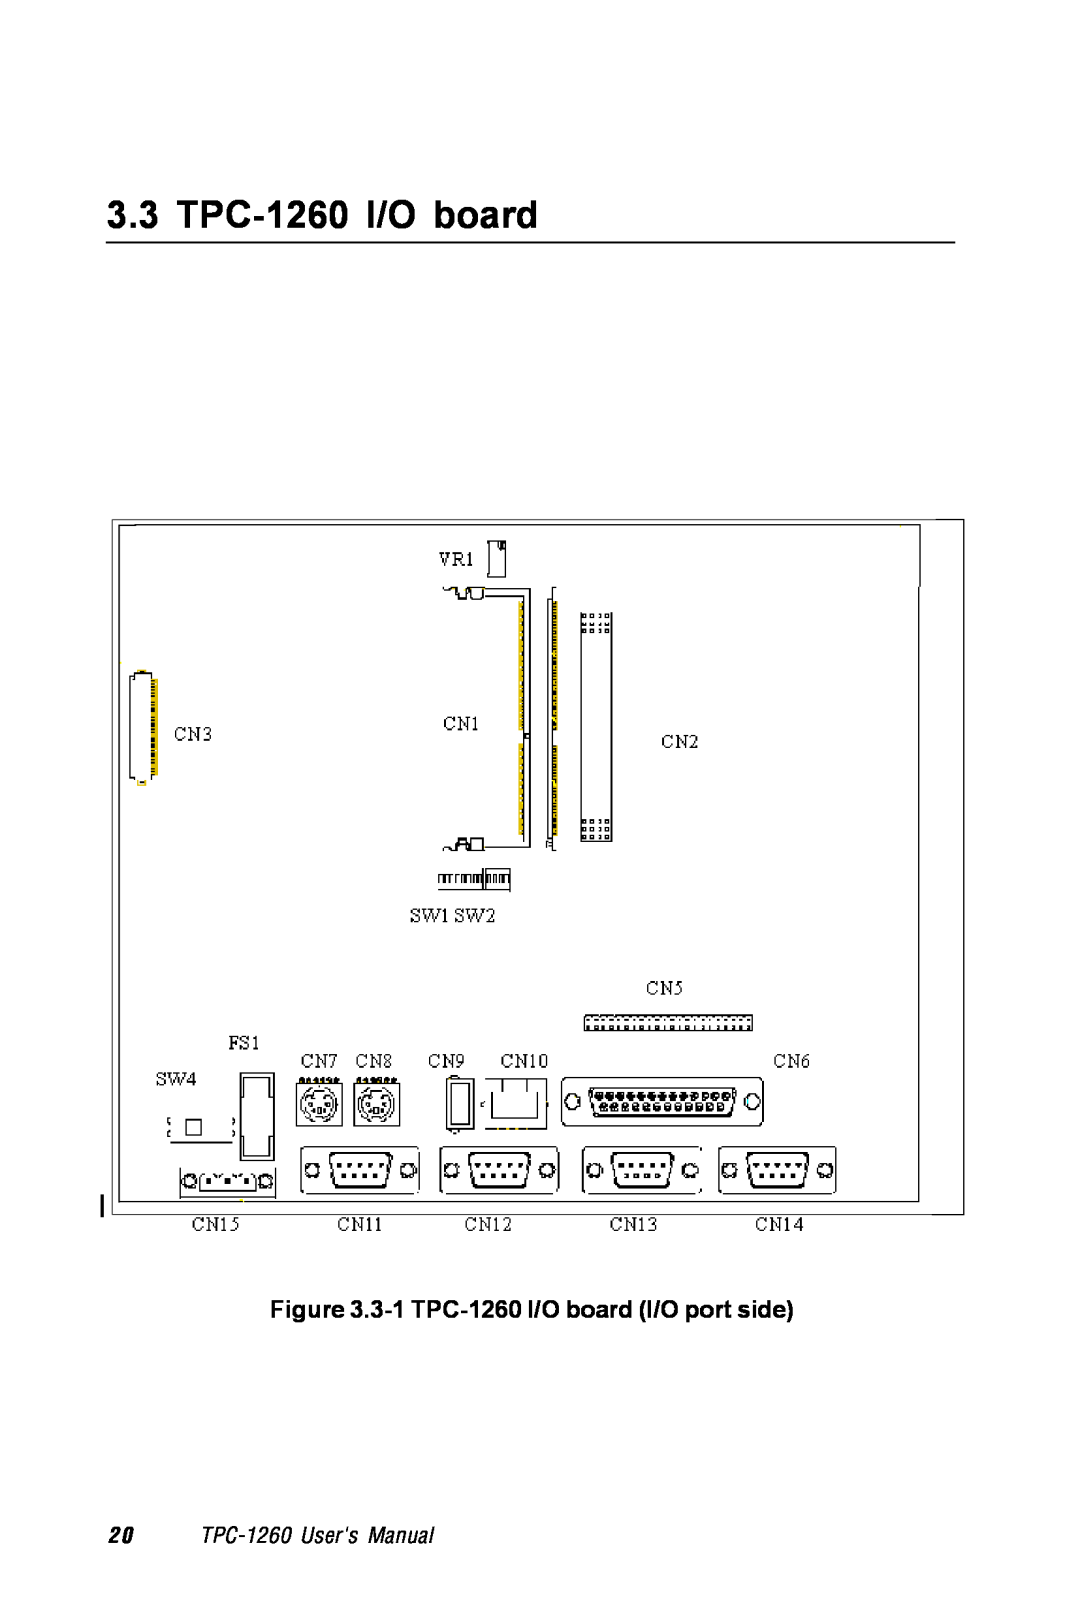 Advantech manual 3-1 TPC-1260 I/O board I/O port side, 2 0 TPC-1260 Users Manual 